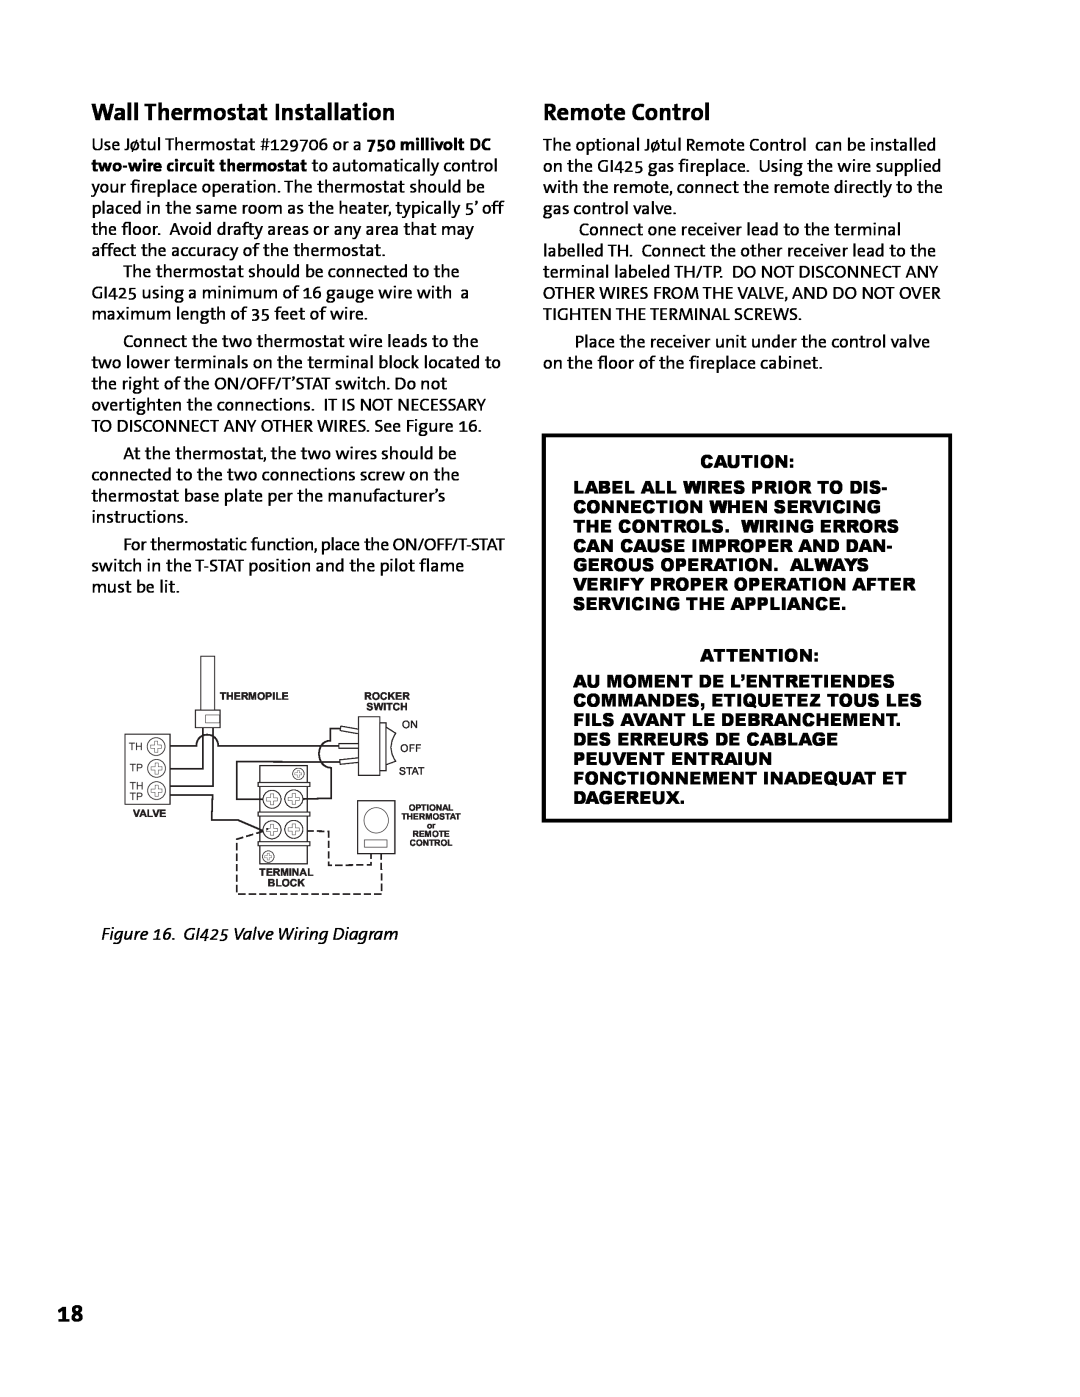 Jotul GI 425 DV manual Wall Thermostat Installation, Remote Control, GI425 Valve Wiring Diagram 